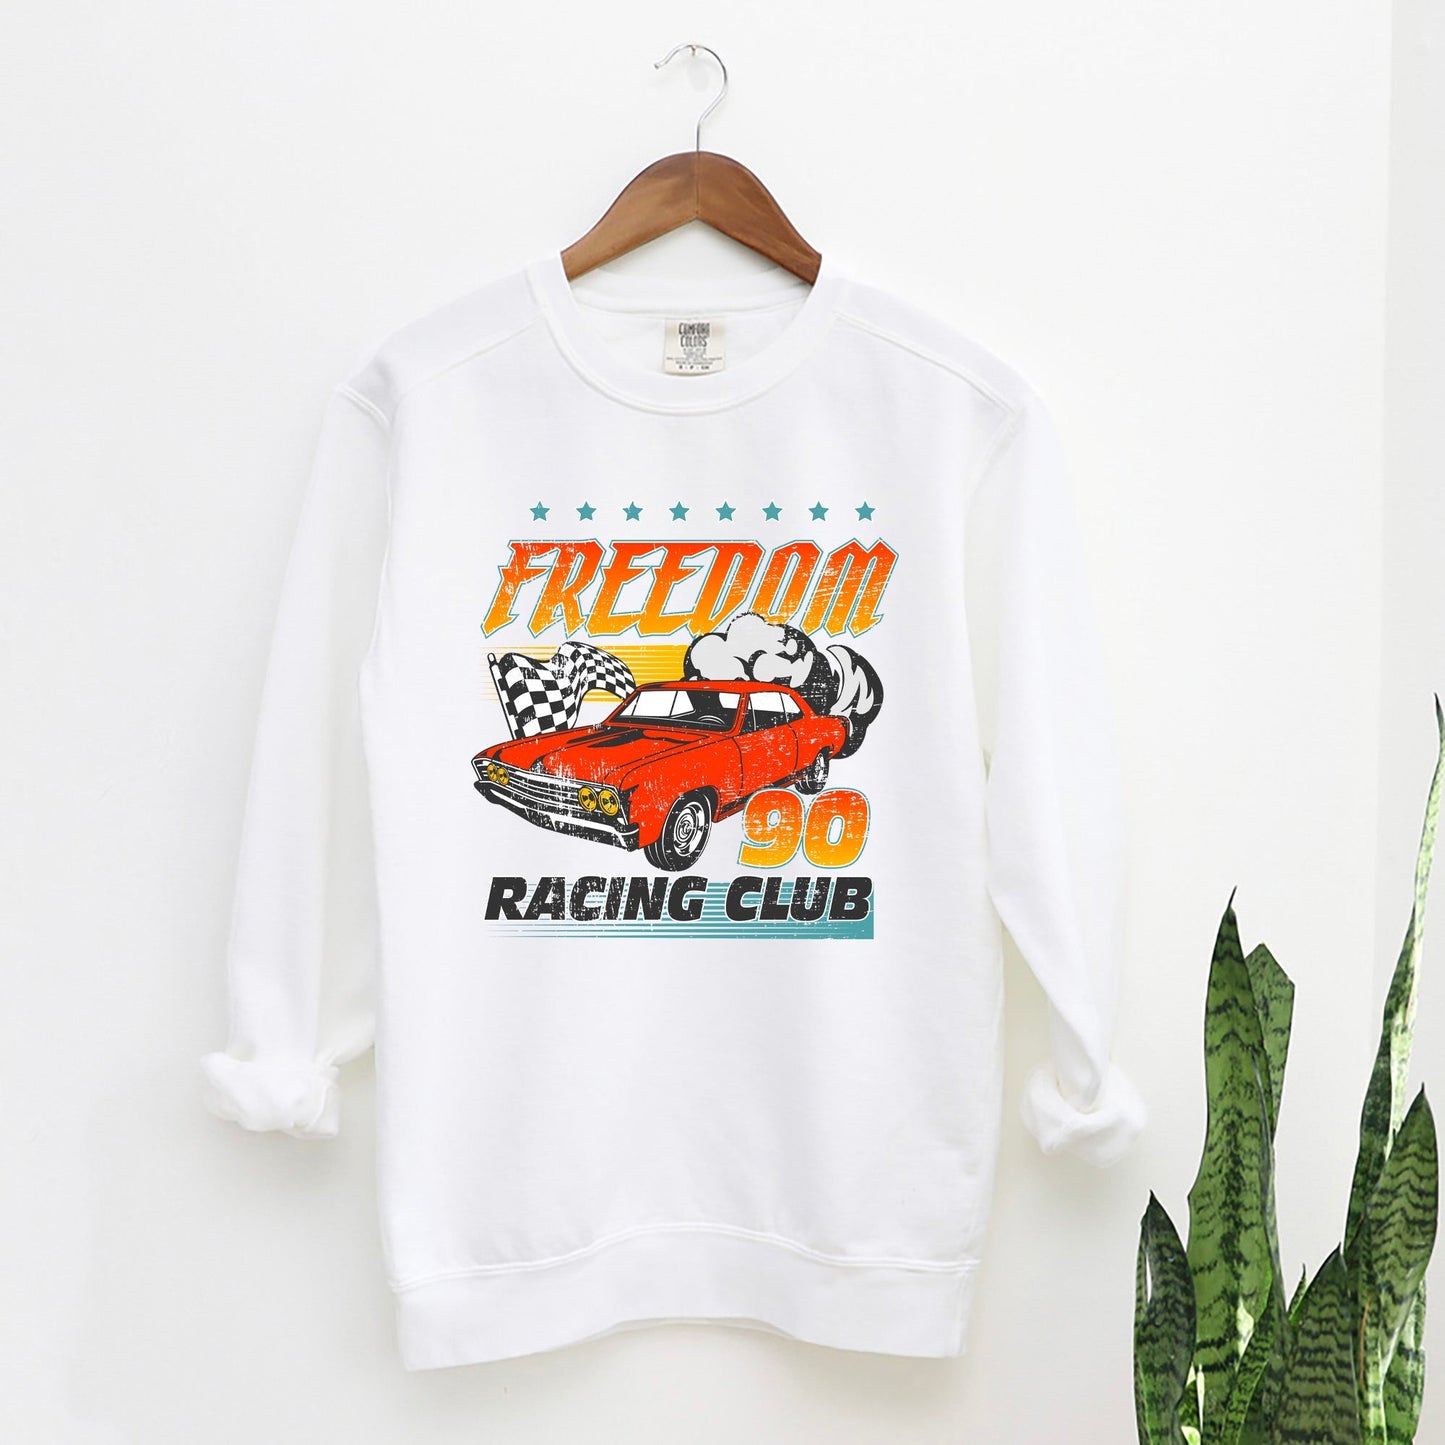 Freedom Racing Club | Garment Dyed Sweatshirt